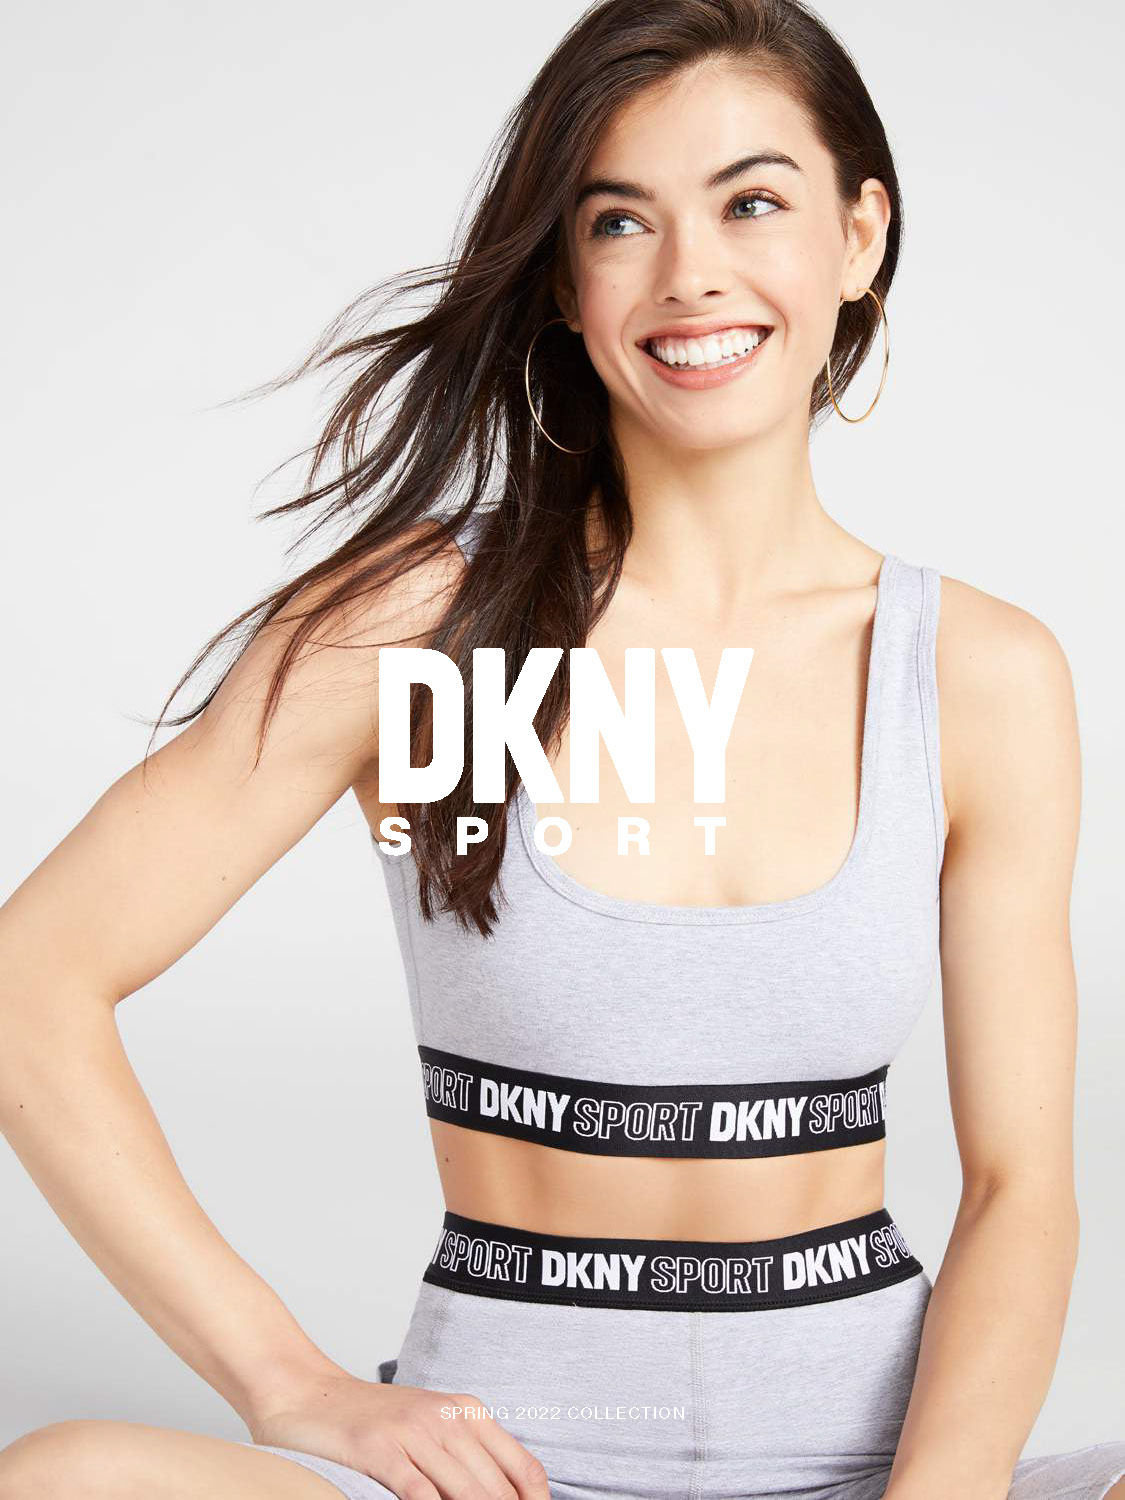 DKNY Fashion Advertising I Greg Sorensen I Fashion & Beauty Photographer I NYC